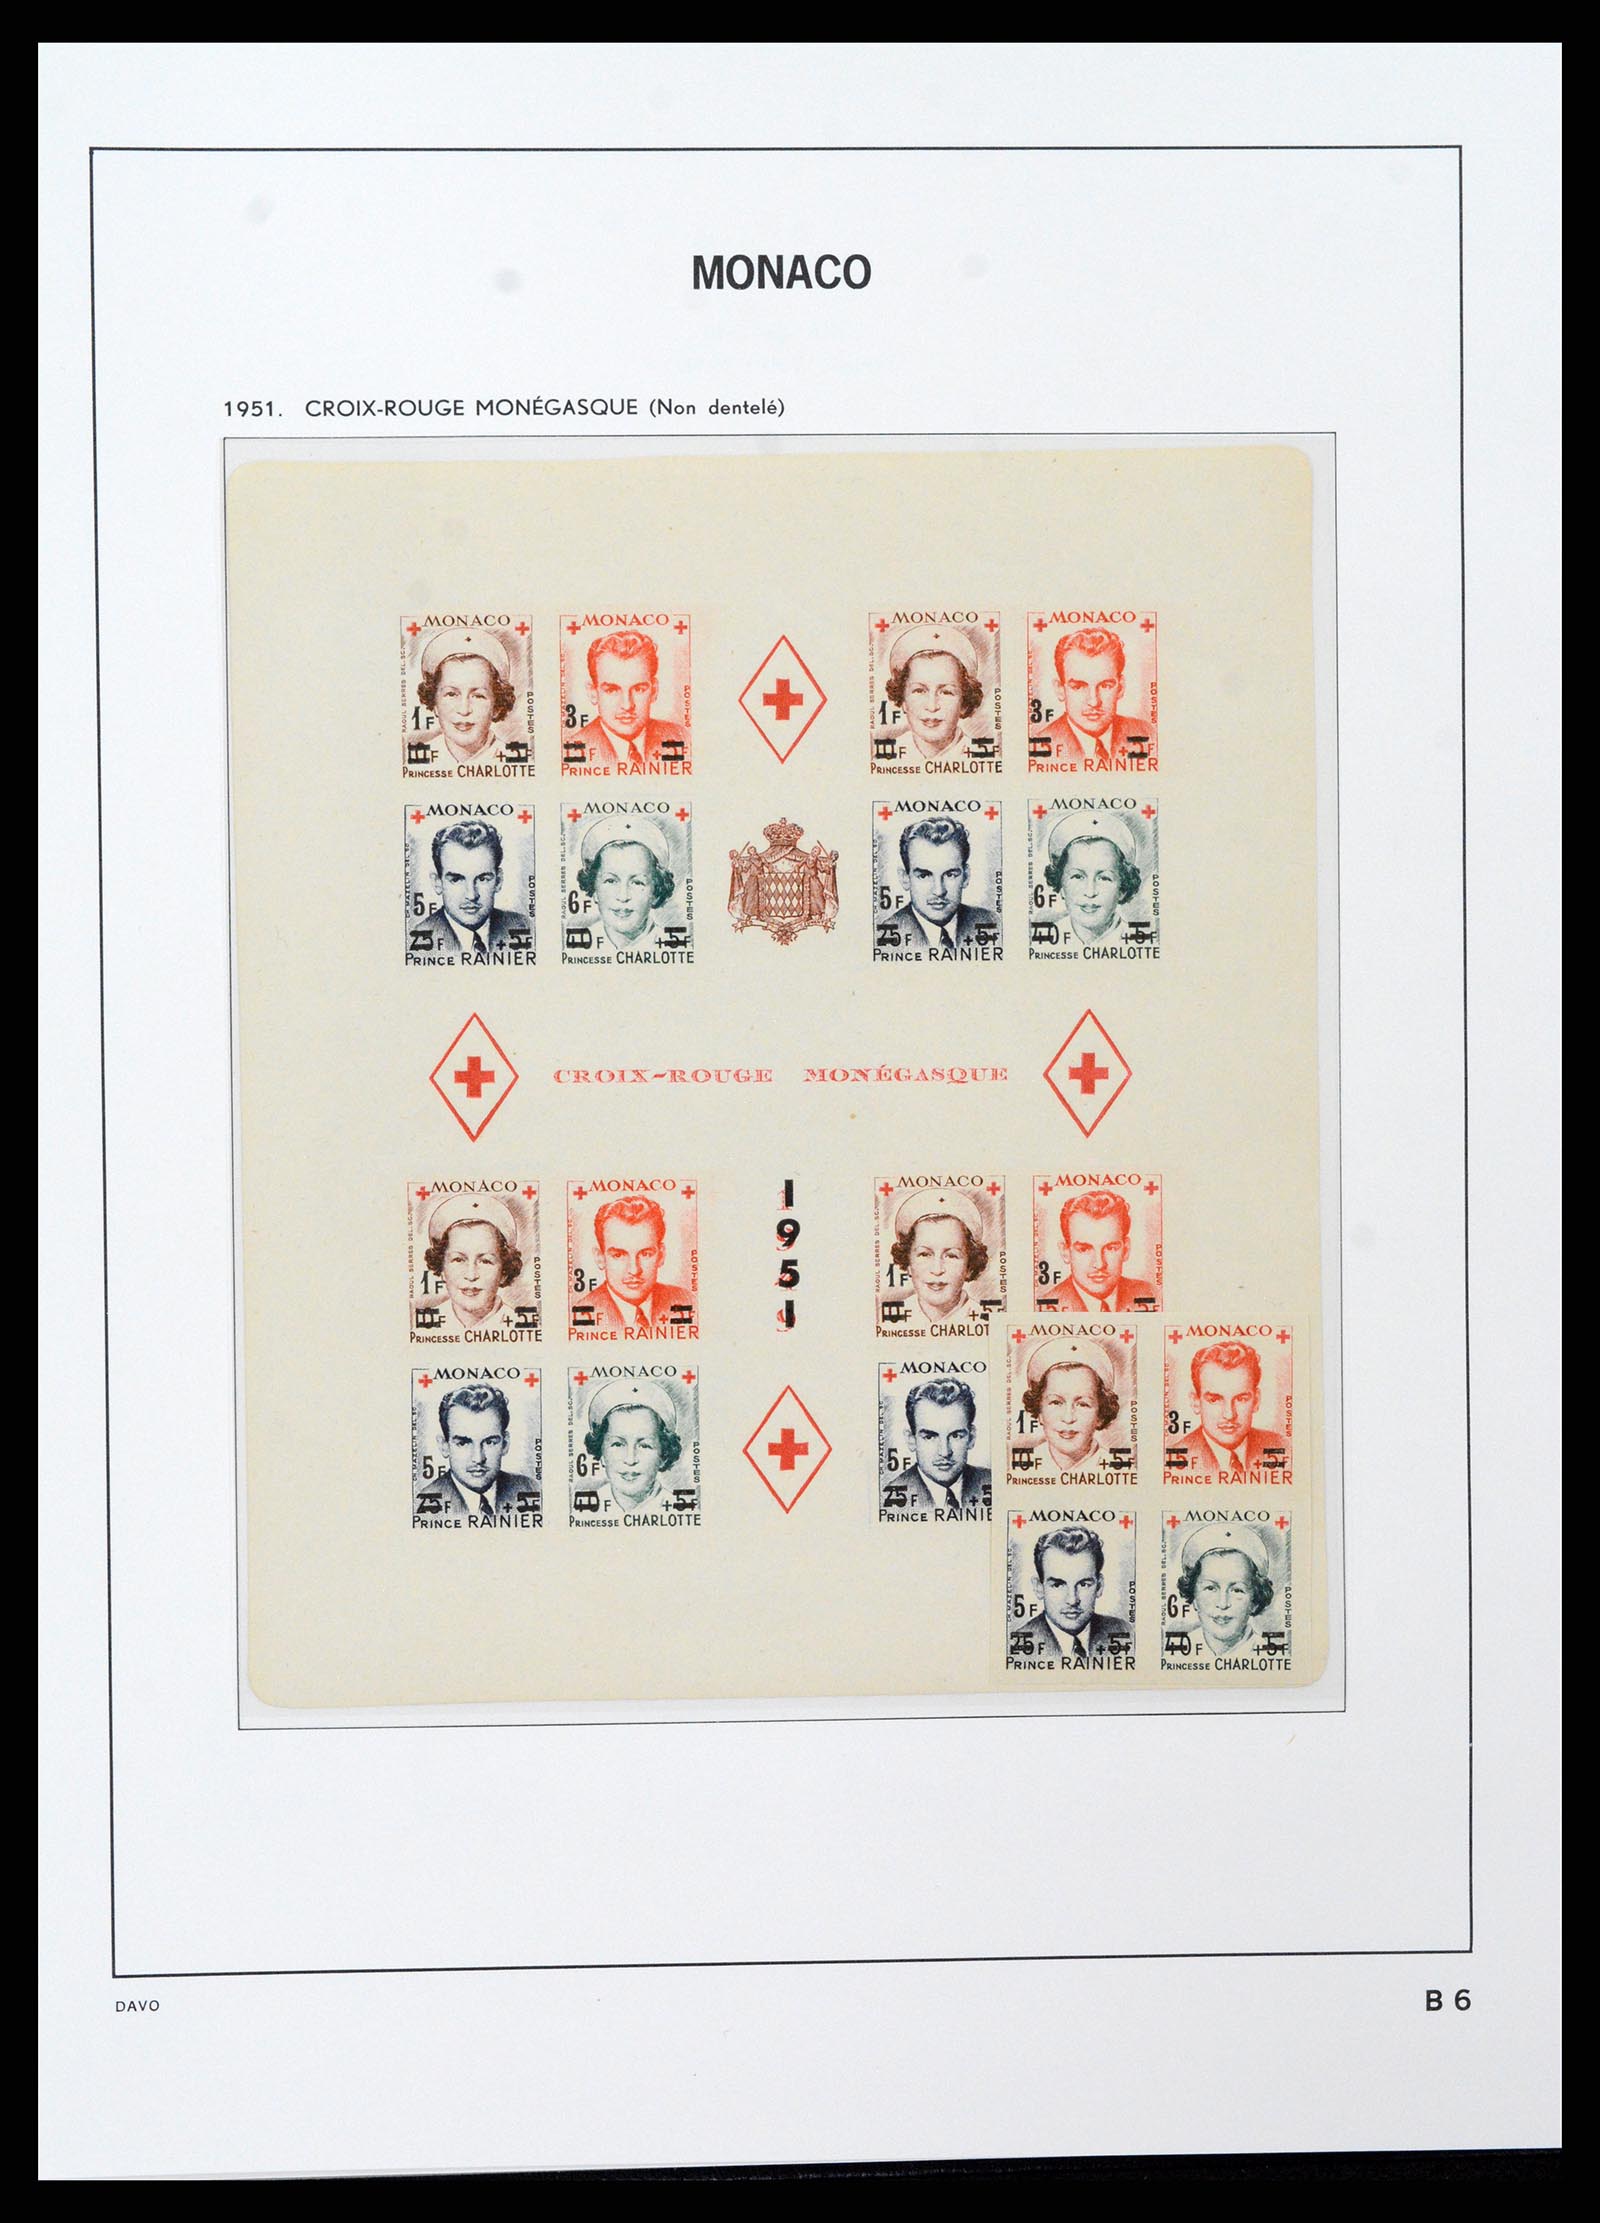 37279 072 - Stamp collection 37279 Monaco 1885-1969.